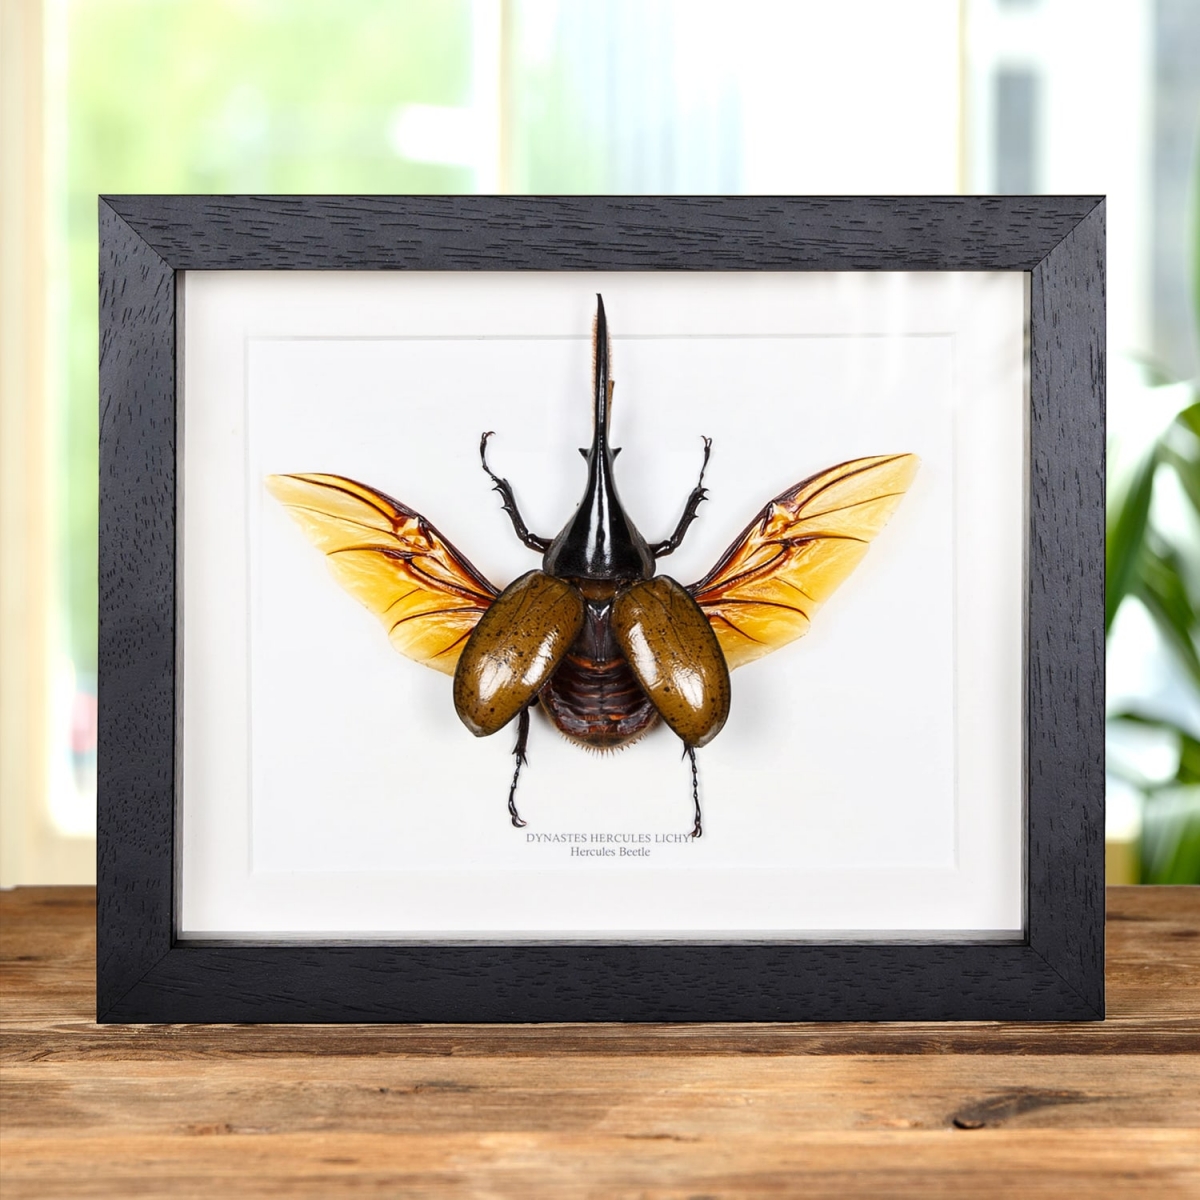 Minibeast Hercules Beetle in Box Frame (Dynastes hercules lichyi)